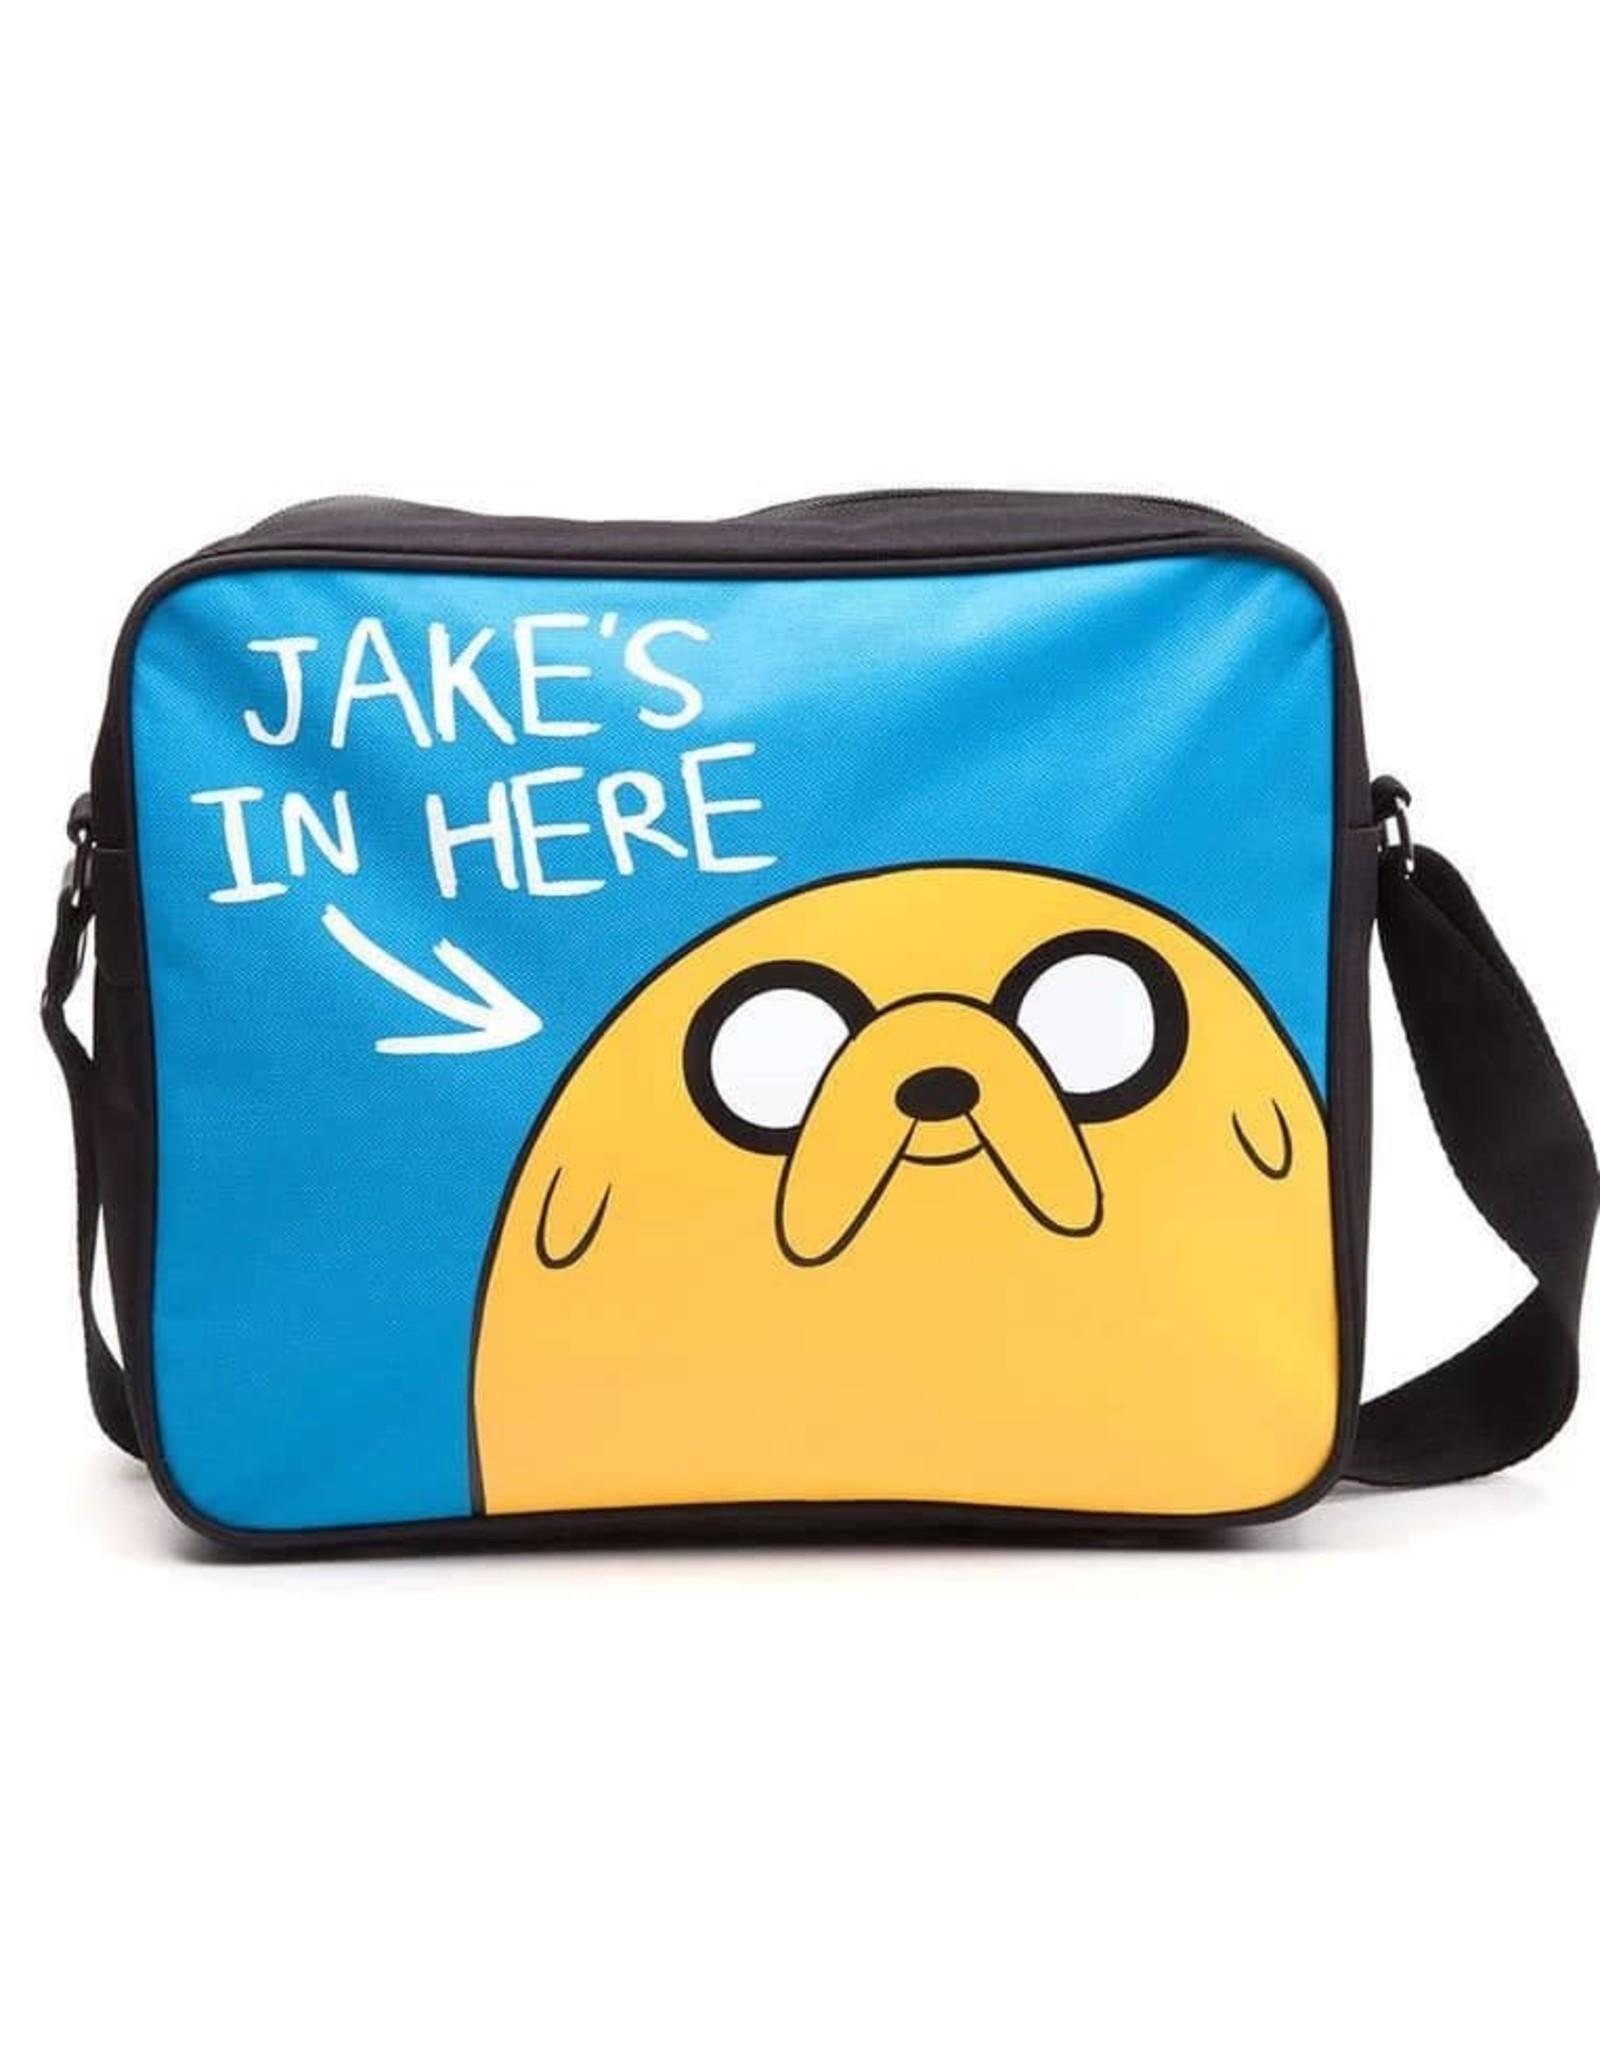 Jual Dompet Koin Adventure Time / Adventure Time Coin Purse Waterproof -  Jakarta Barat - Chubby Bunny Shop | Tokopedia